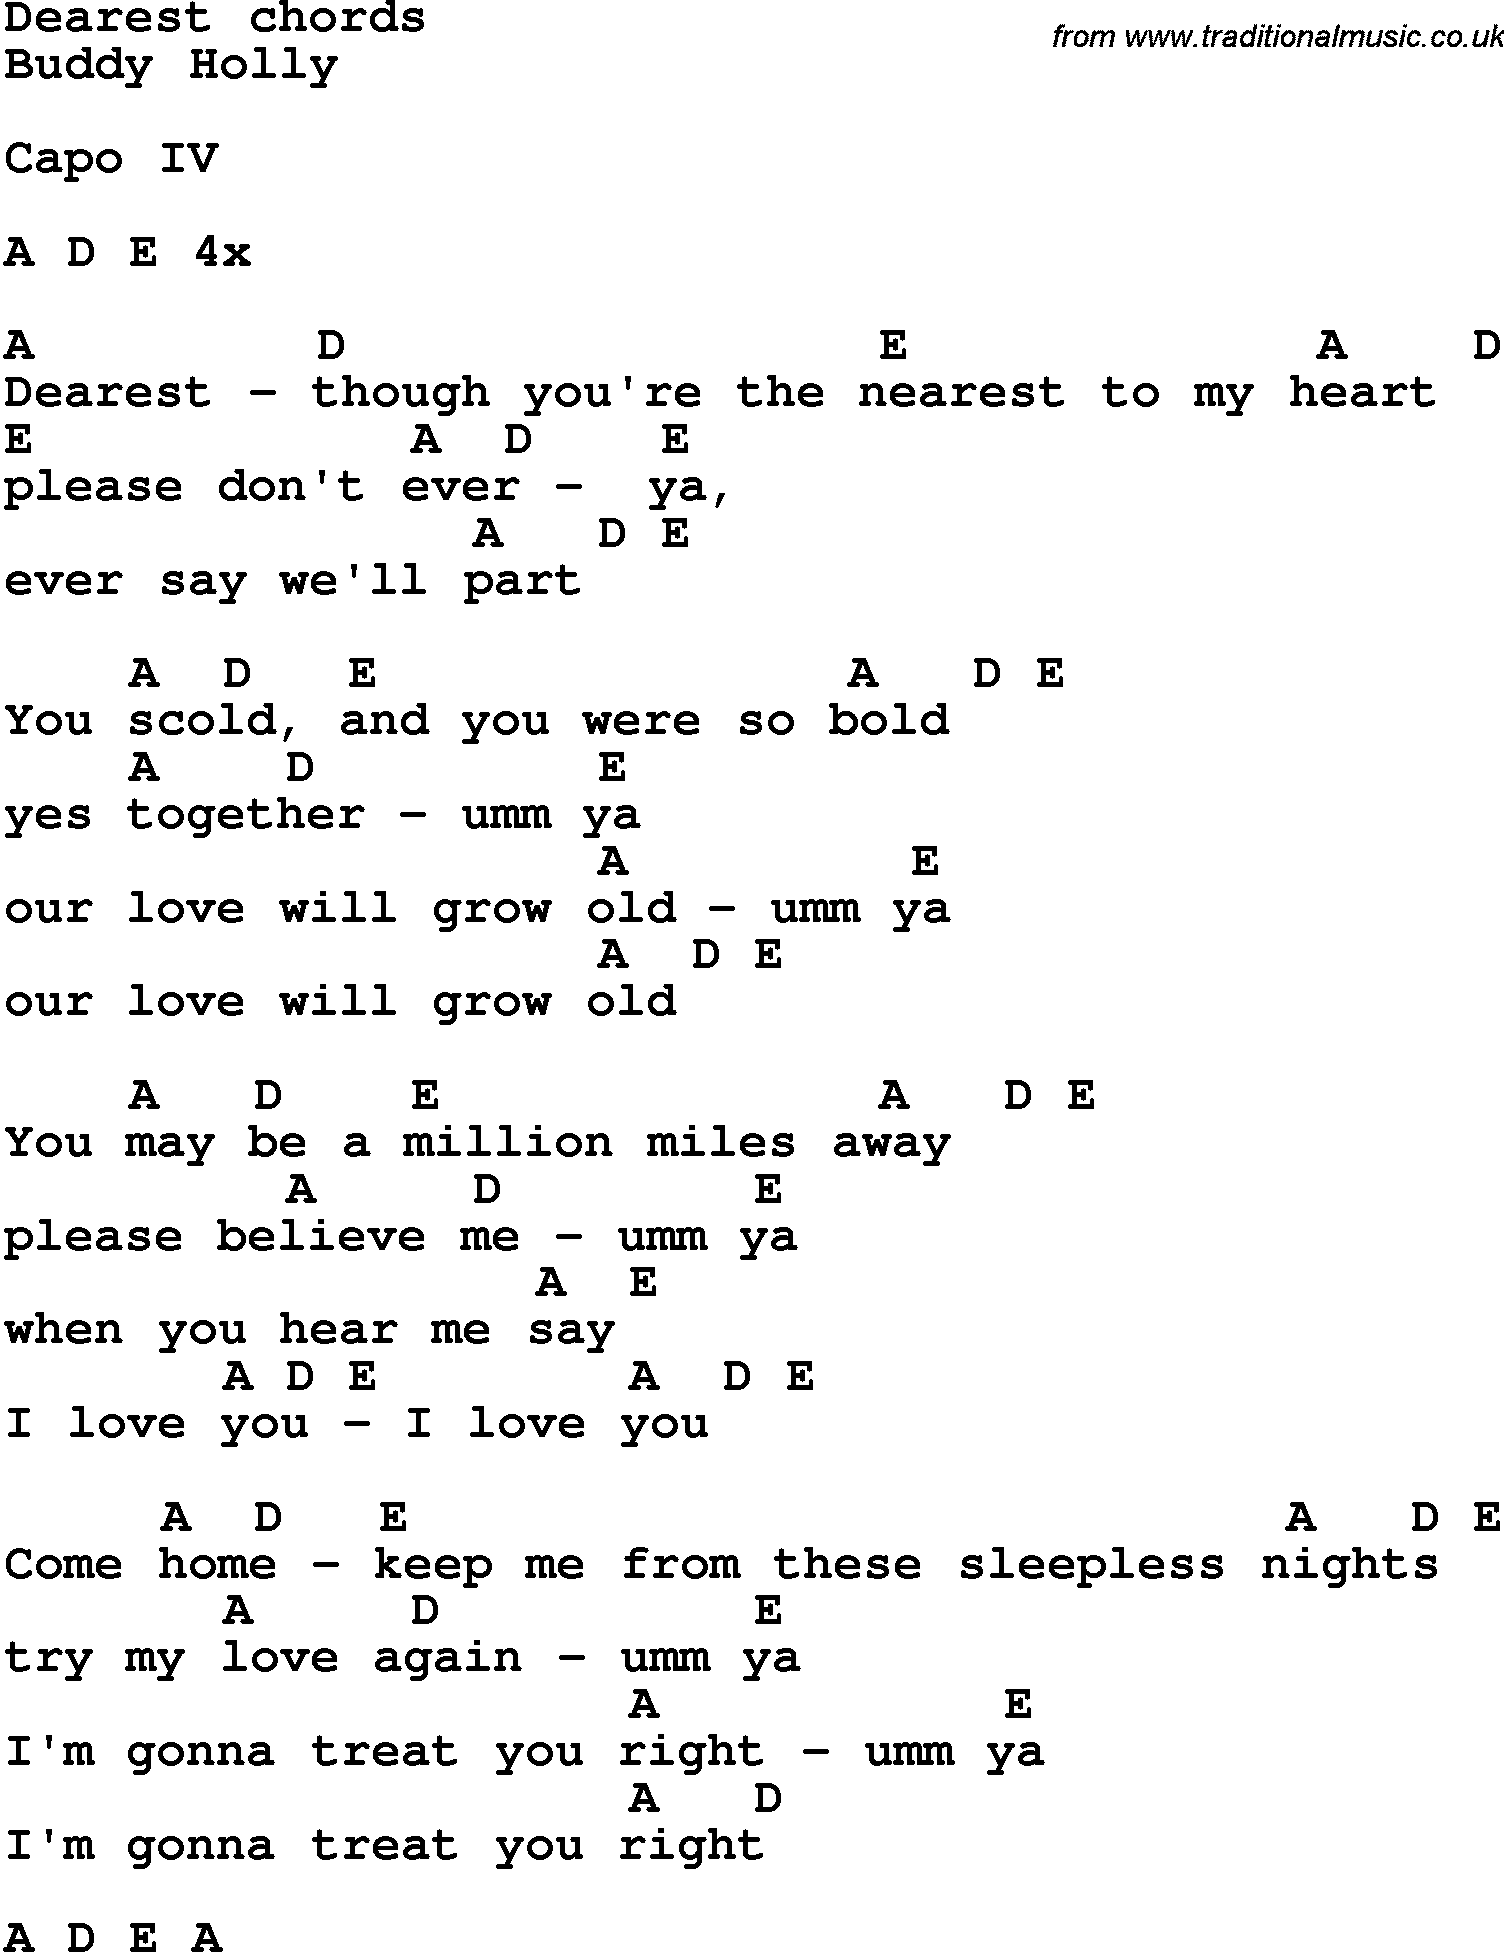 Song Lyrics with guitar chords for Dearest